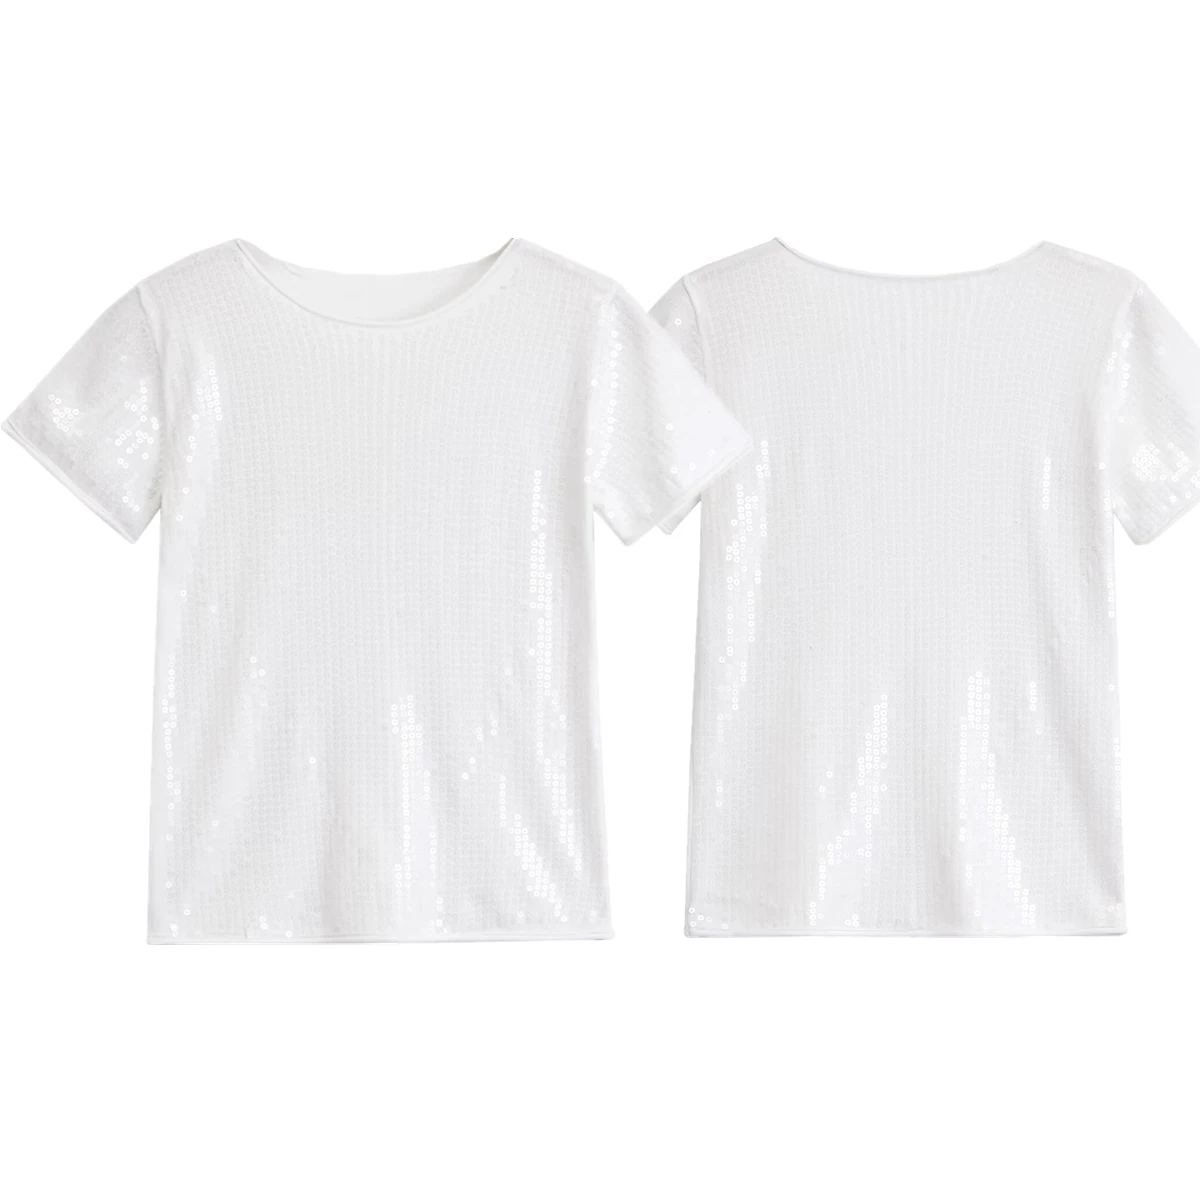 

Dave&Di Summer T-shirt Women Tops Minimalism Fashion Elegant Sequin Round Neck Short Sleeved Tshirts For Women